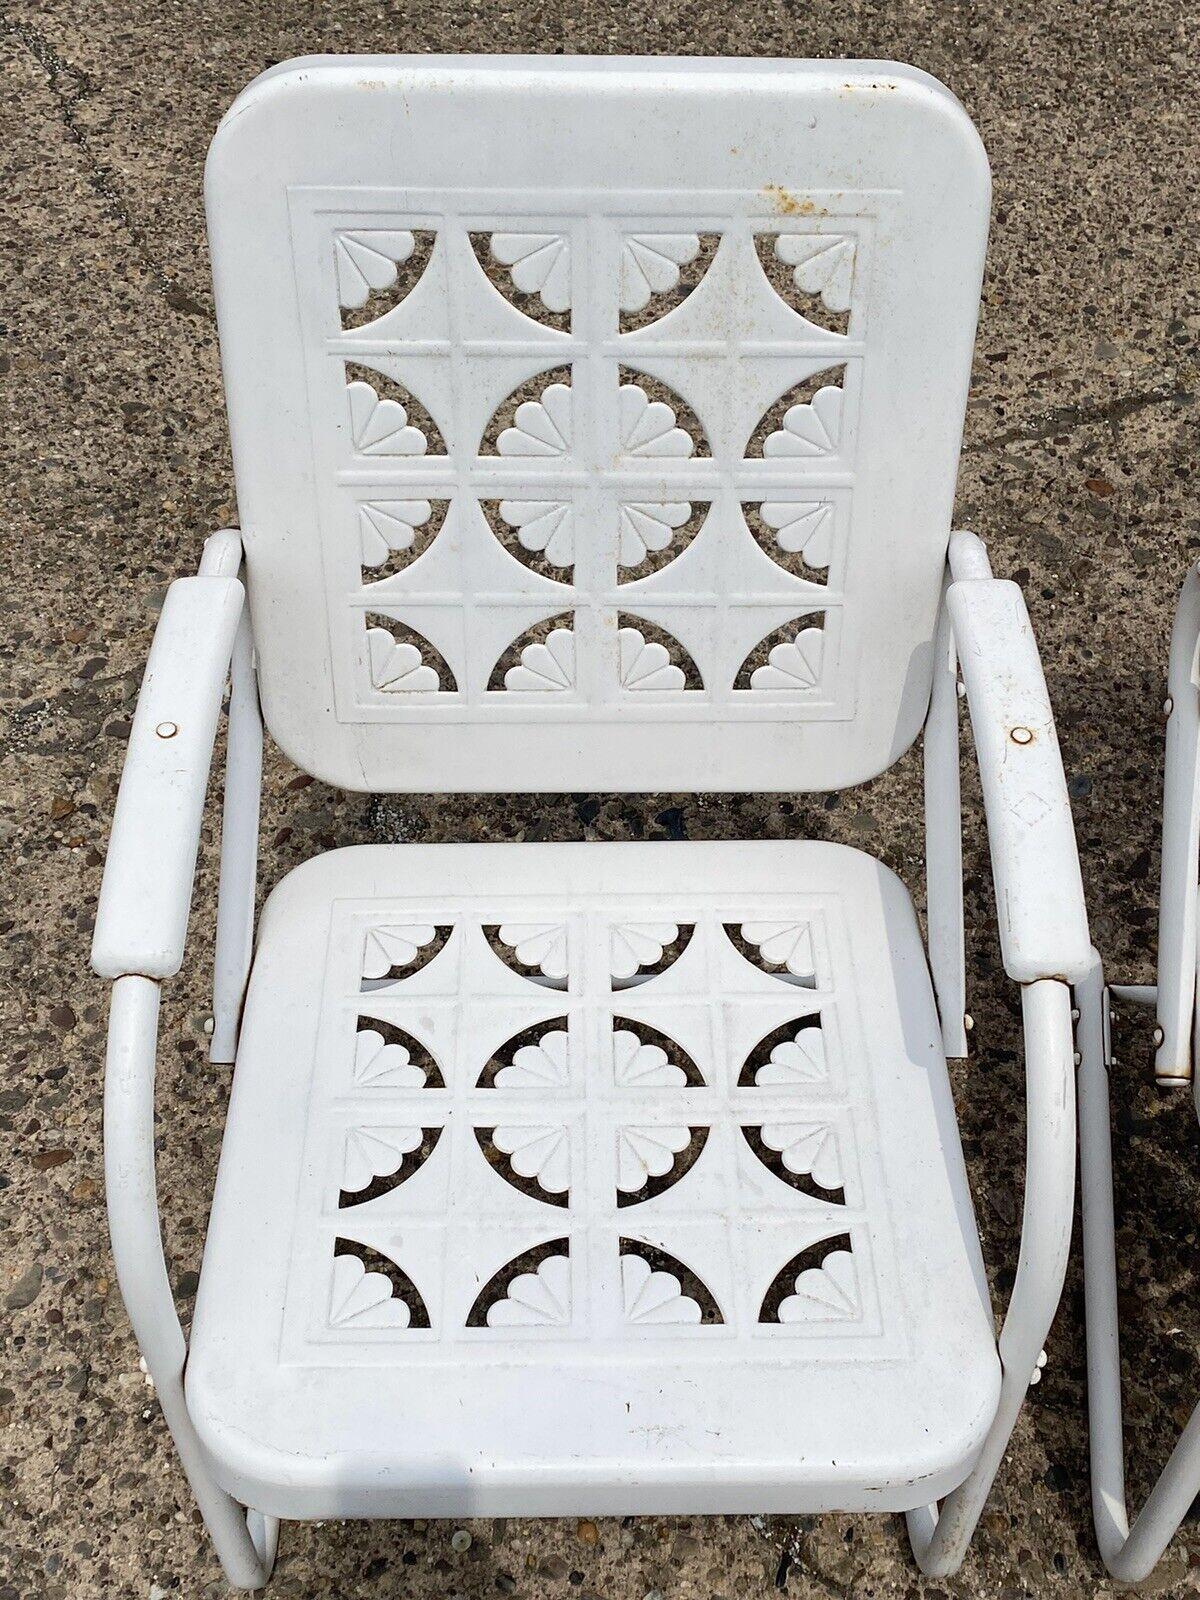 Mid-Century Modern Vintage Starburst Pie Crest Metal Outdoor Patio Springer Lounge Chairs - a Pair For Sale